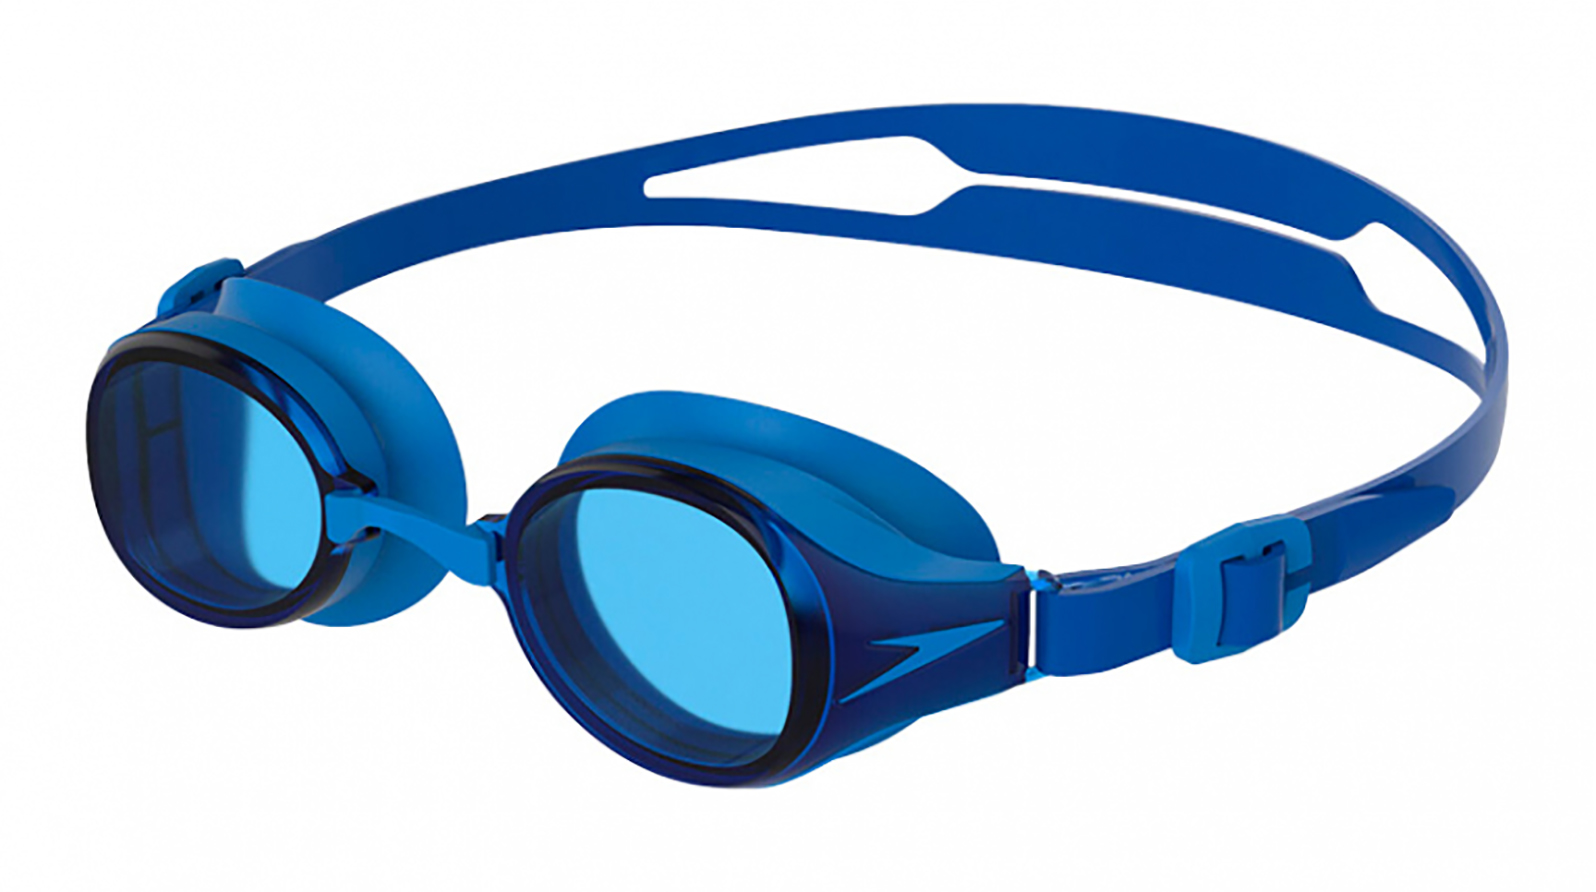 Speedo Очки для плавания Hydropure Optical F809 -4.5 speedo очки для плавания hydropure optical f809 2 5